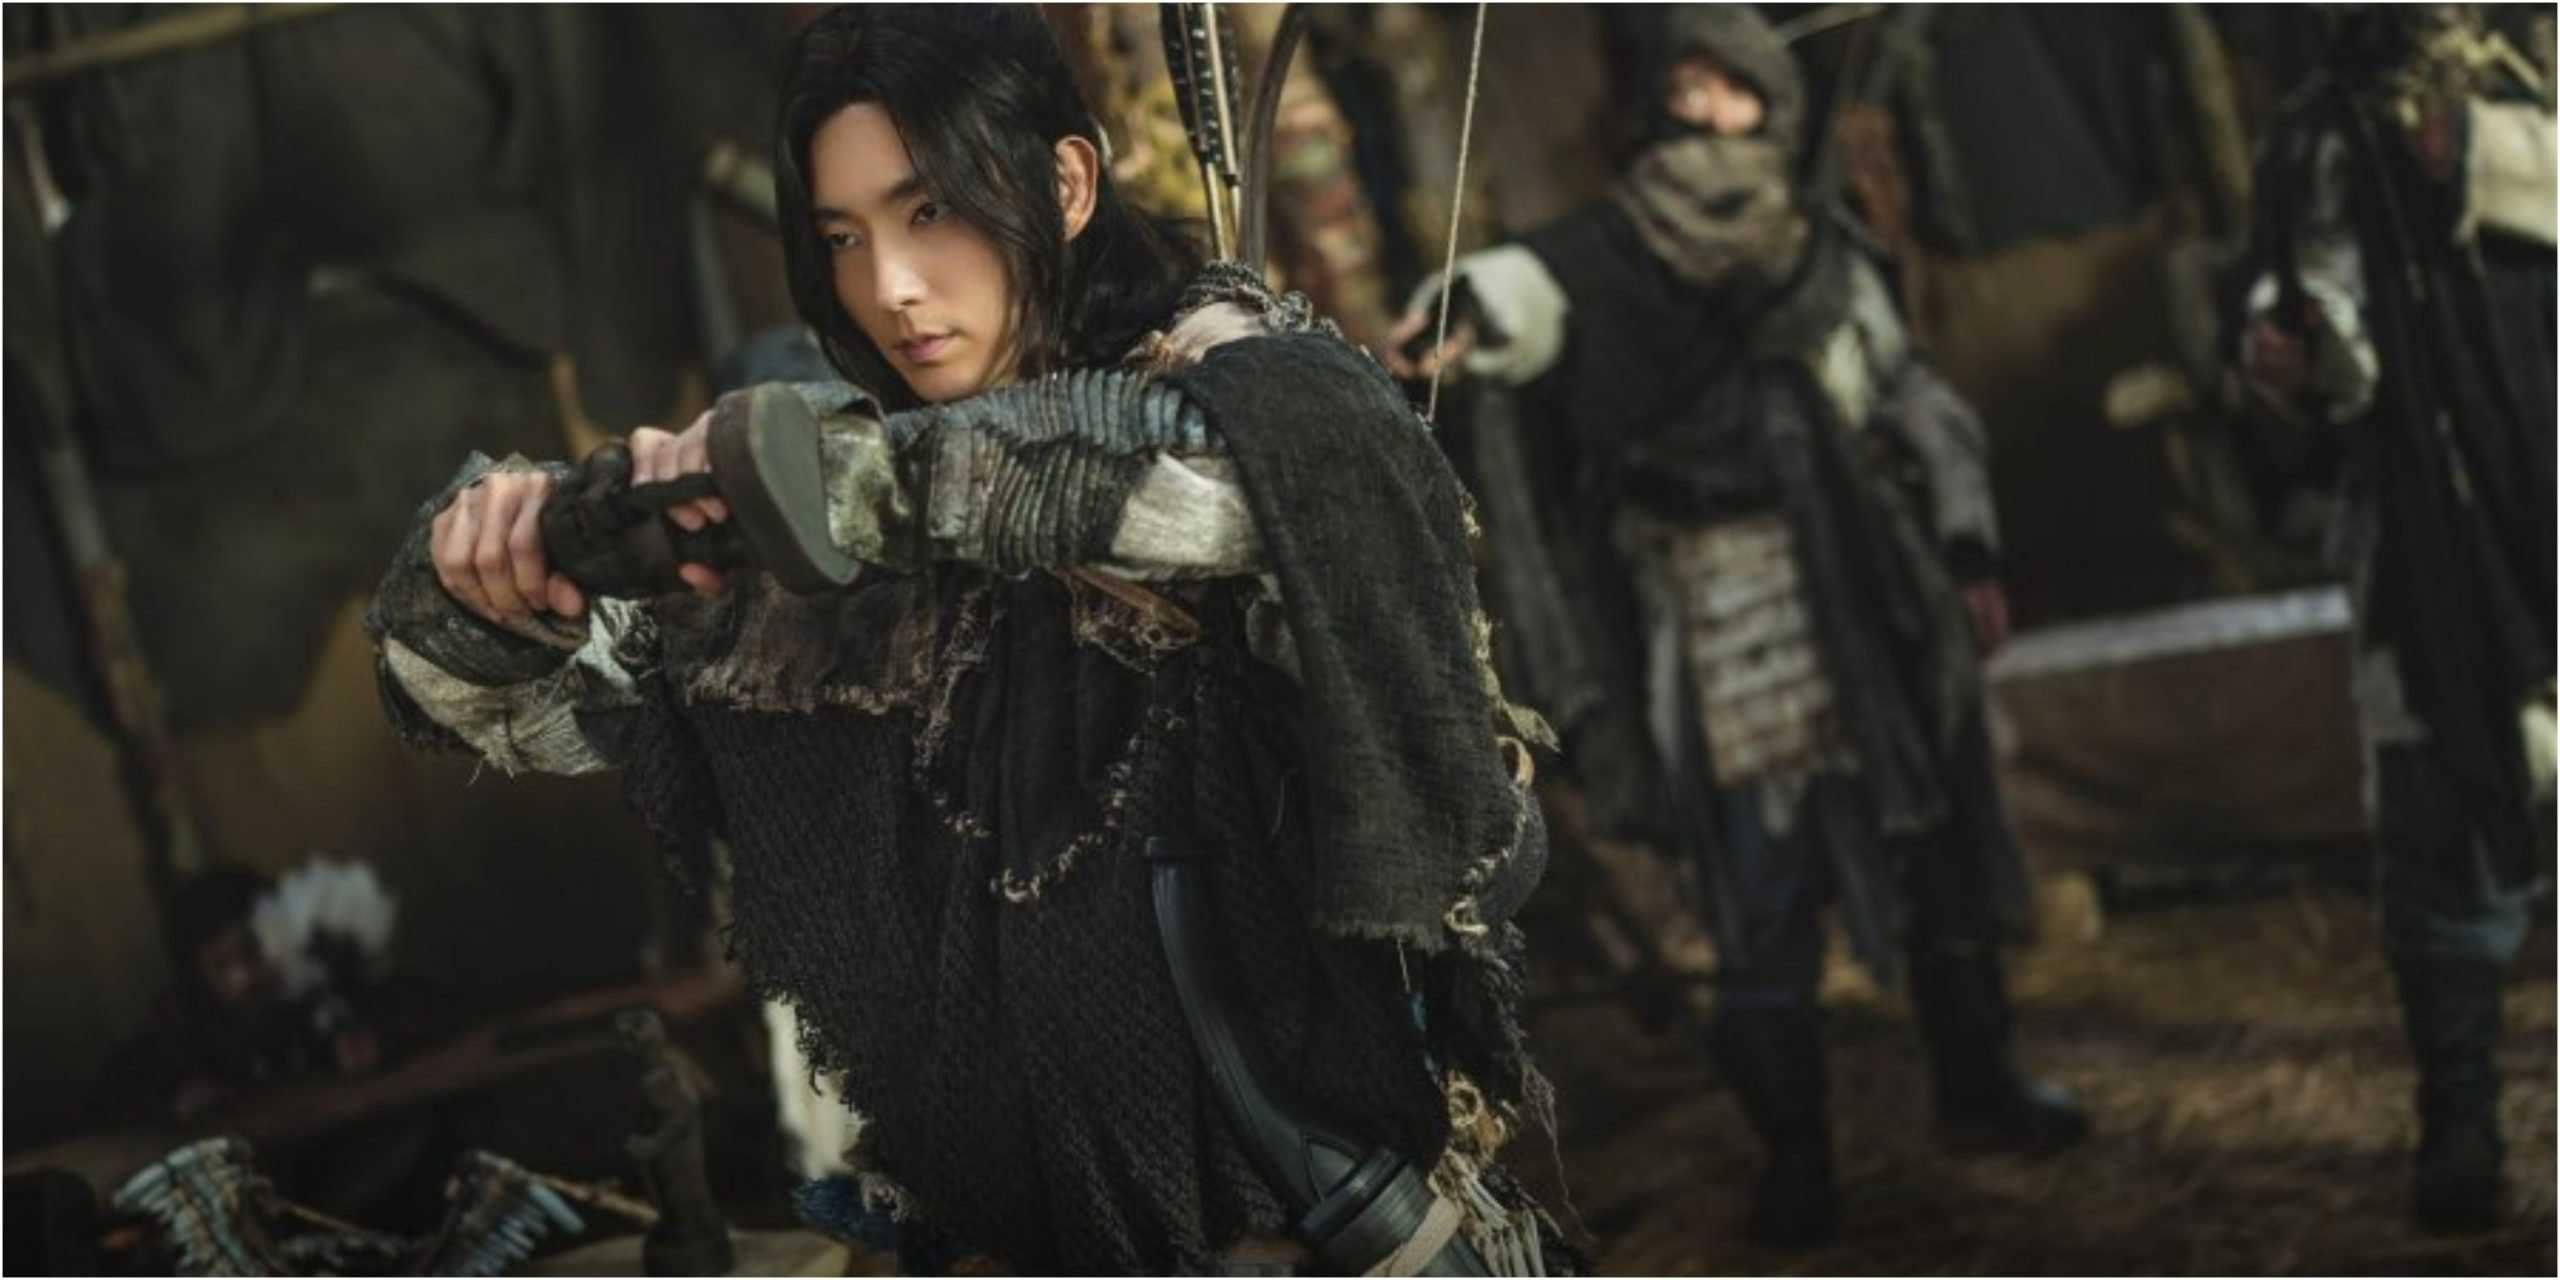 Korean Action Fantasy Arthdal Chronicles The Sword of Aramoon Synopsis